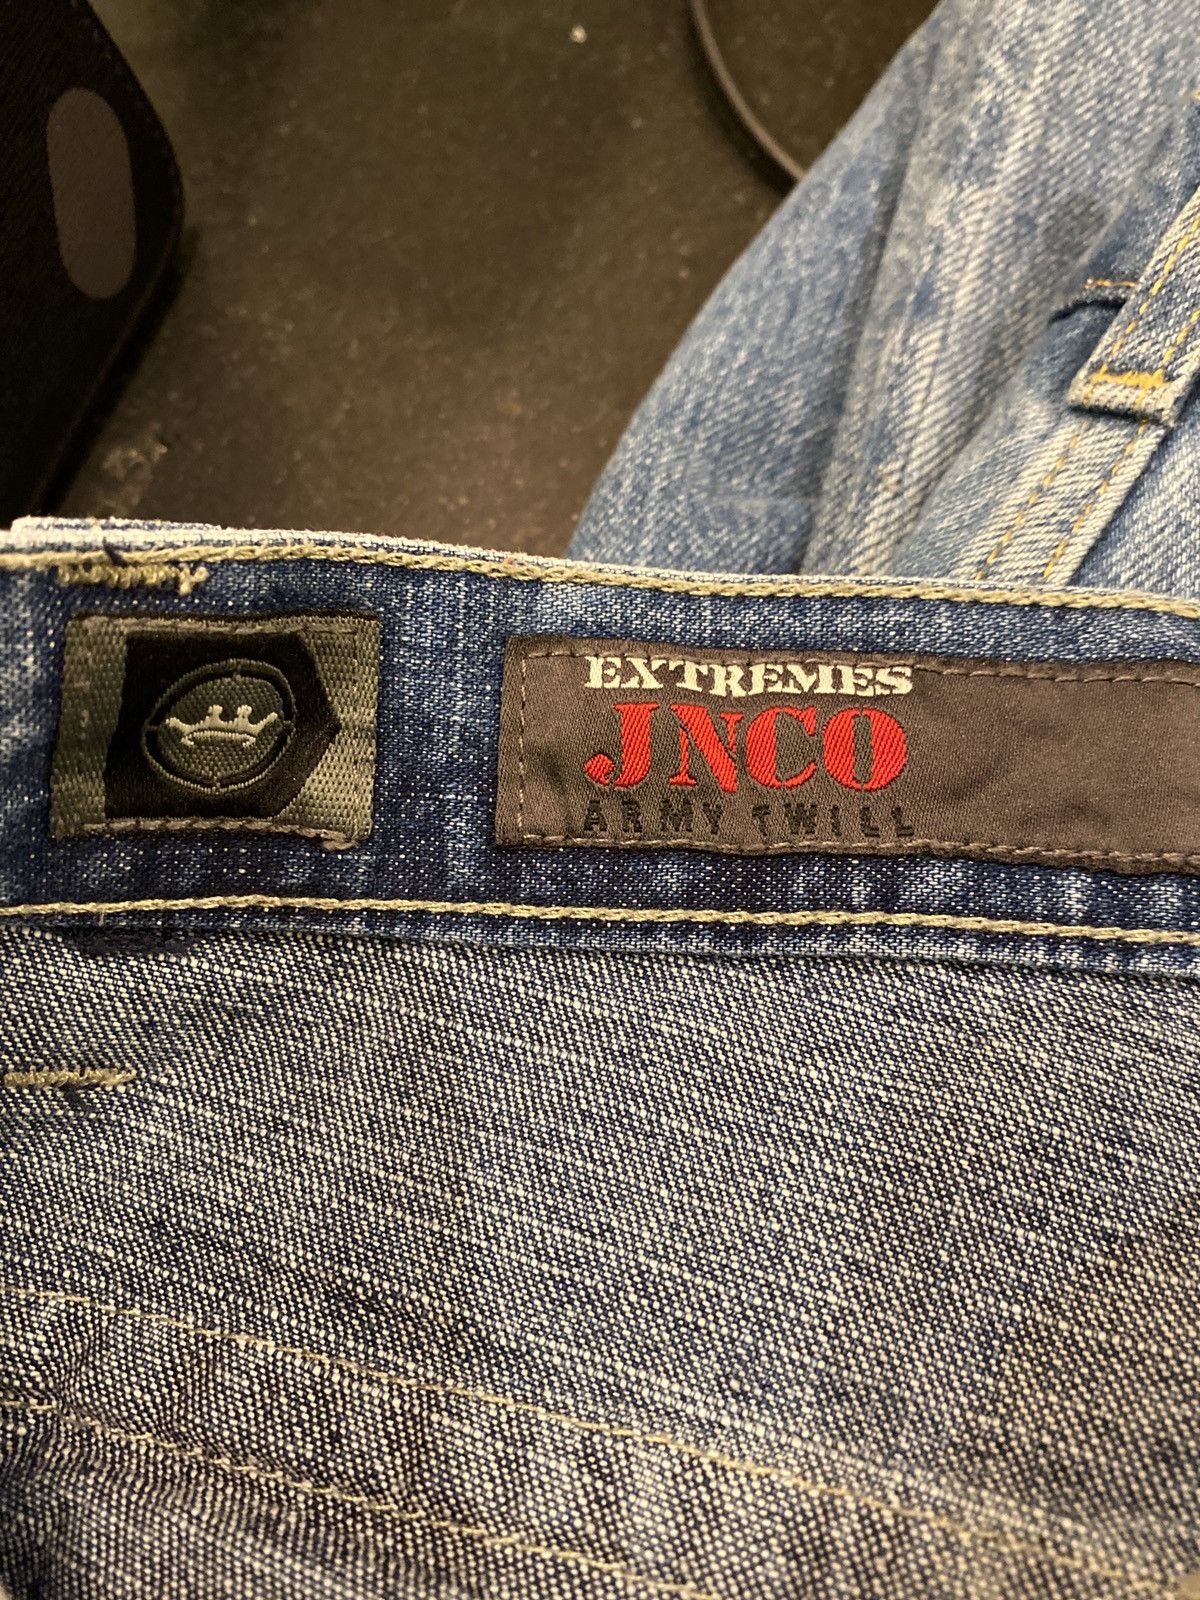 Jnco JNCO Jeans Extreme hybrid denim cargo Size US 30 / EU 46 - 5 Preview